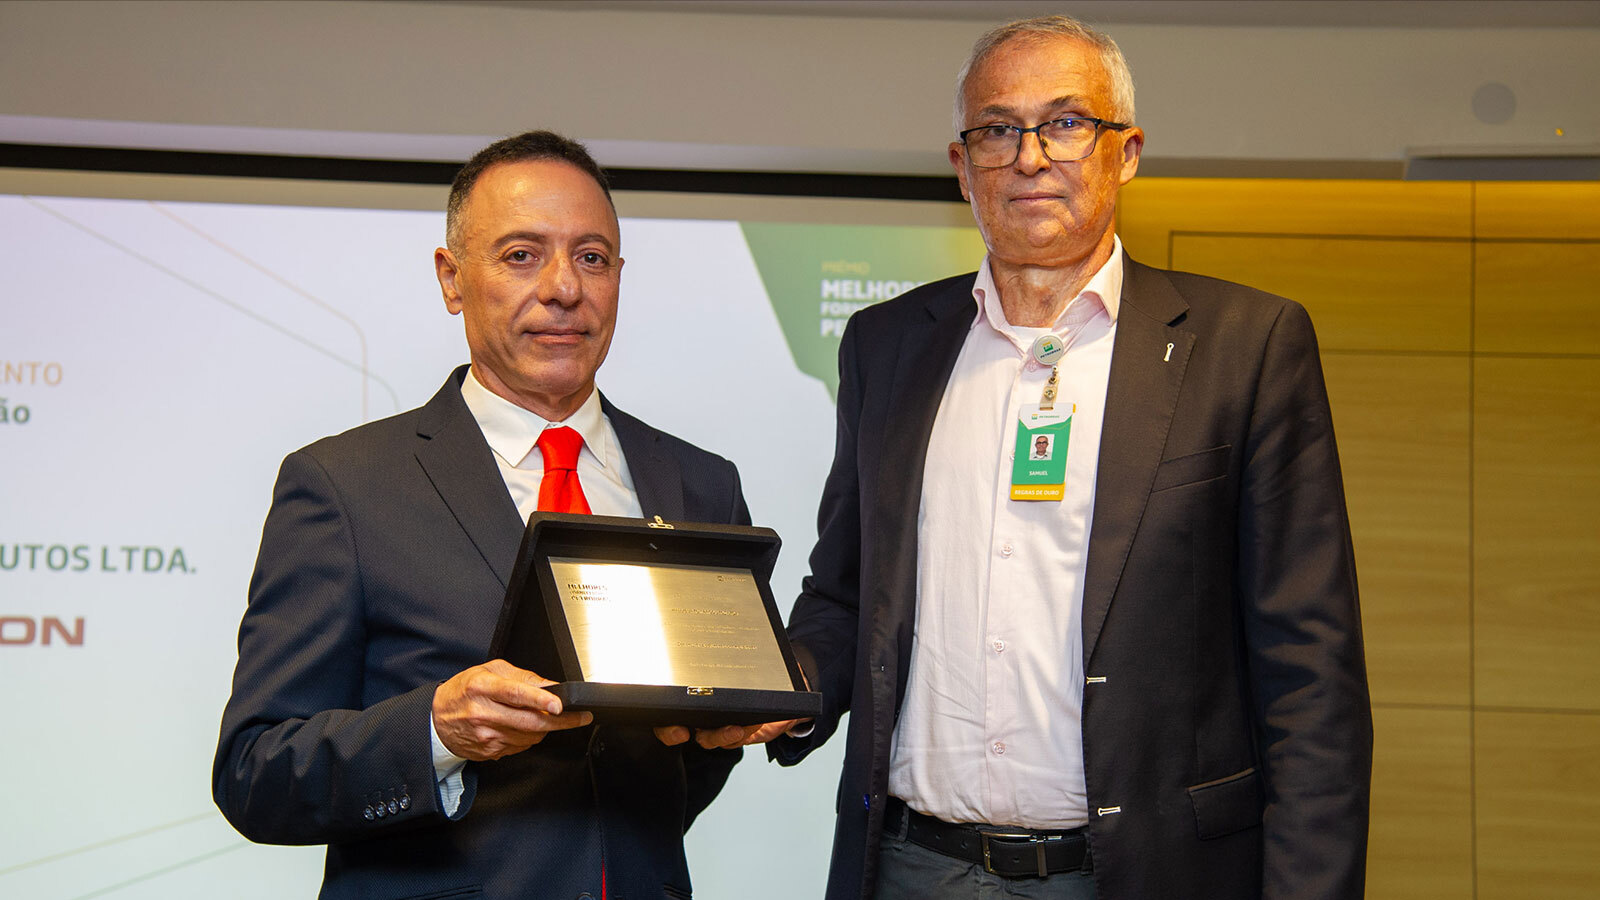 Anouar Fraija, Halliburton vice president, Brazil,  receives the ward from Petrobras